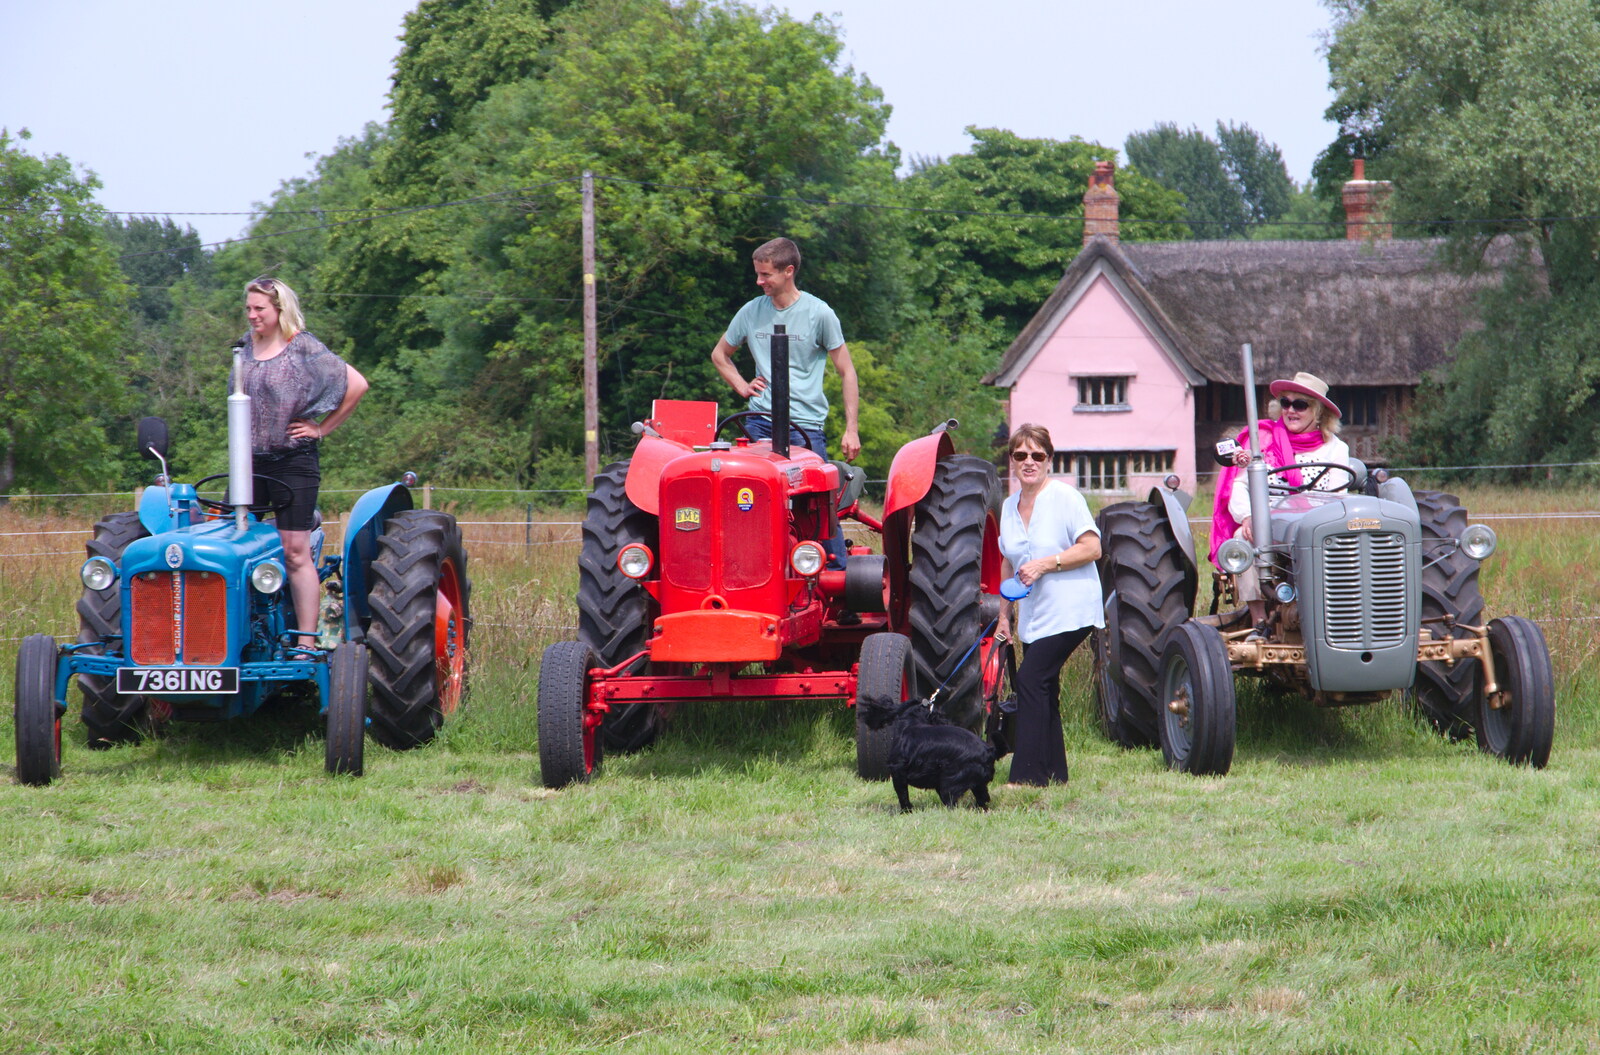 More tractor parking from A Hog Roast on Little Green, Thrandeston, Suffolk - 23rd June 2019